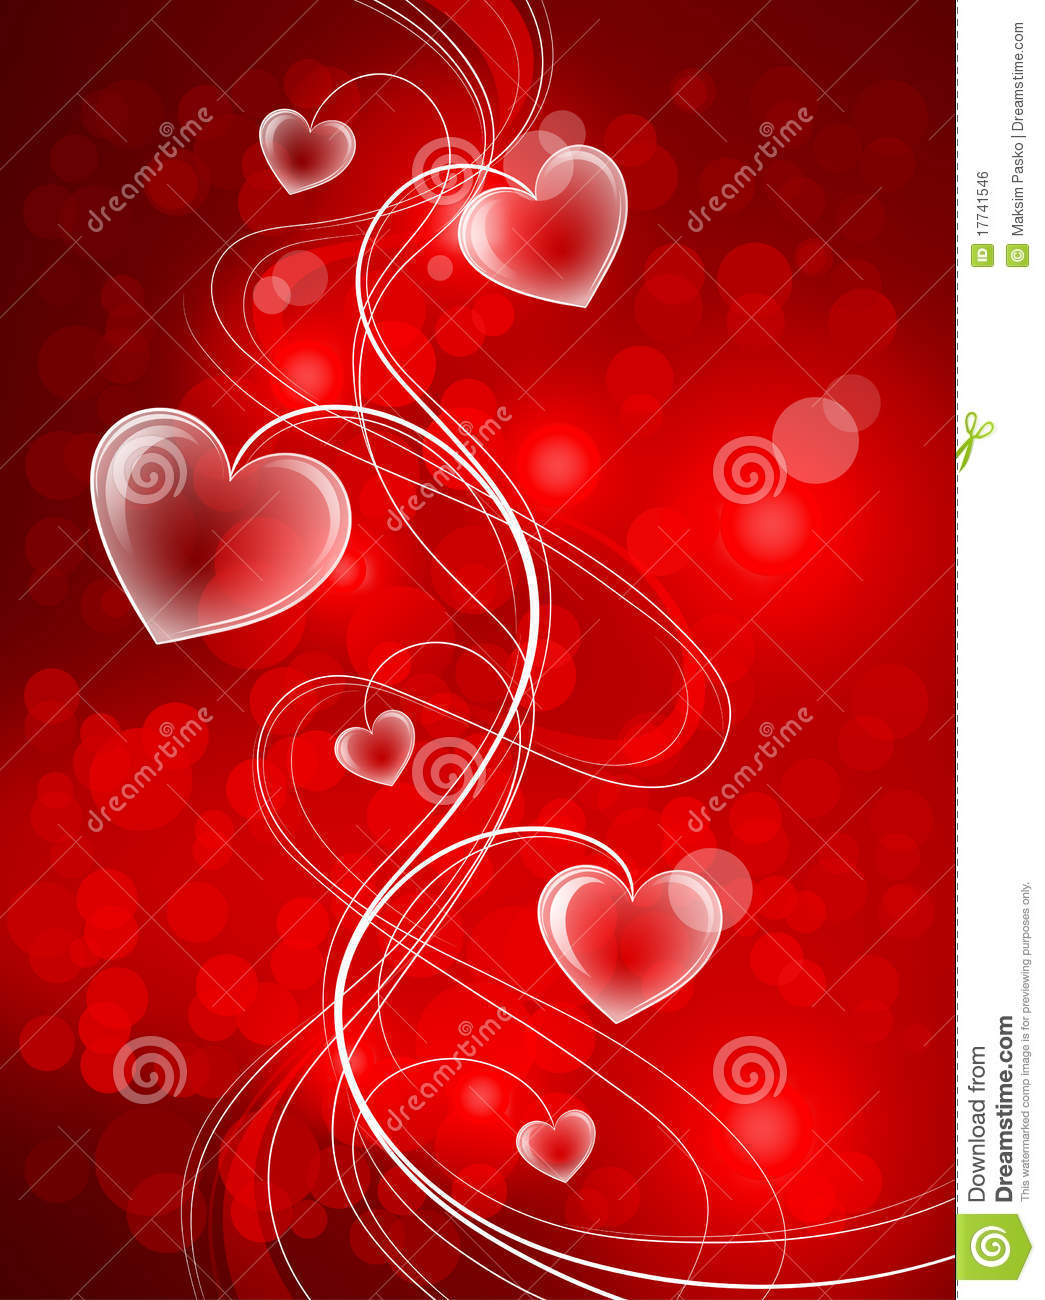 Valentines Royalty Free Stock Image  Image 17741546 Art